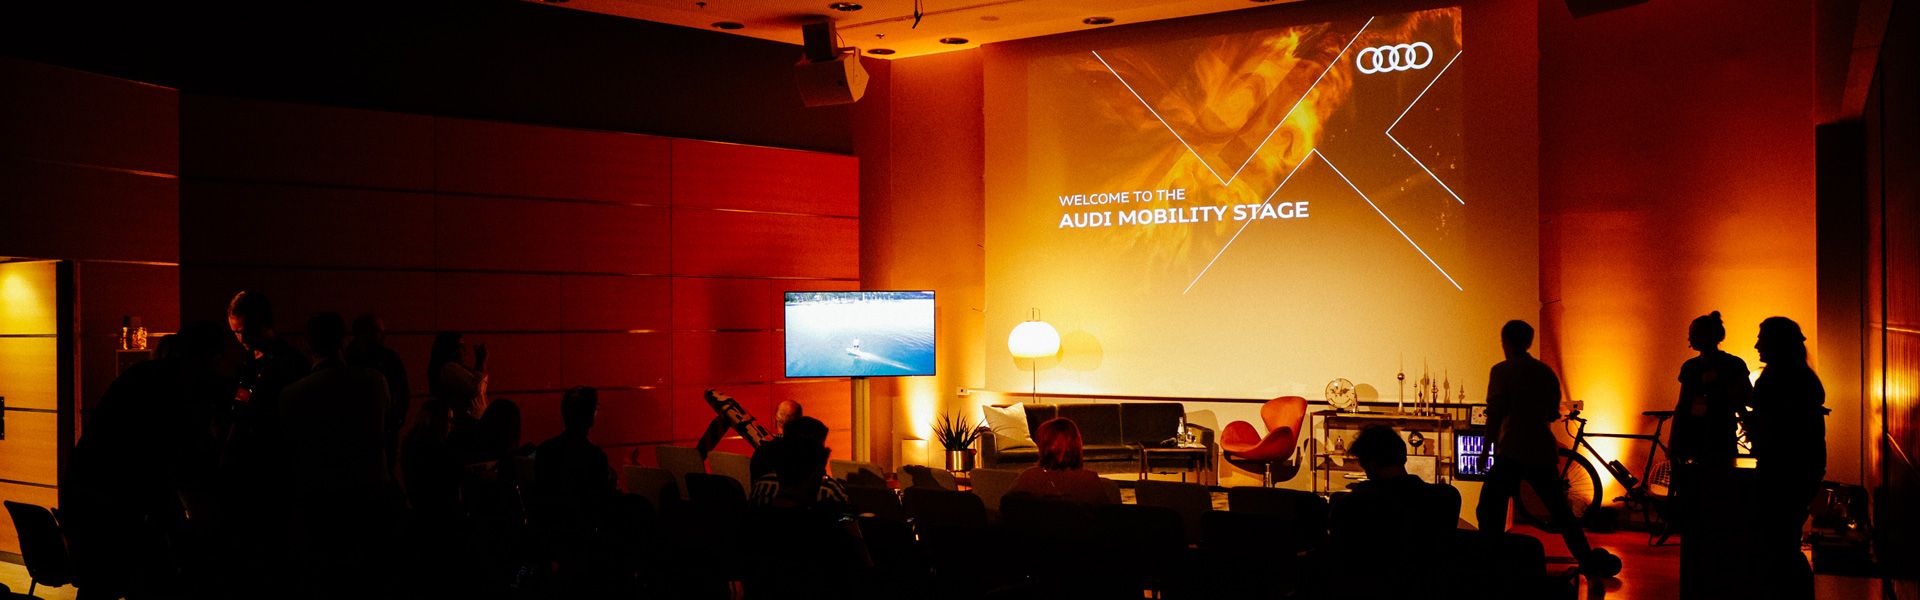 Audi Mobility Stage at Bits & Pretzels 2019